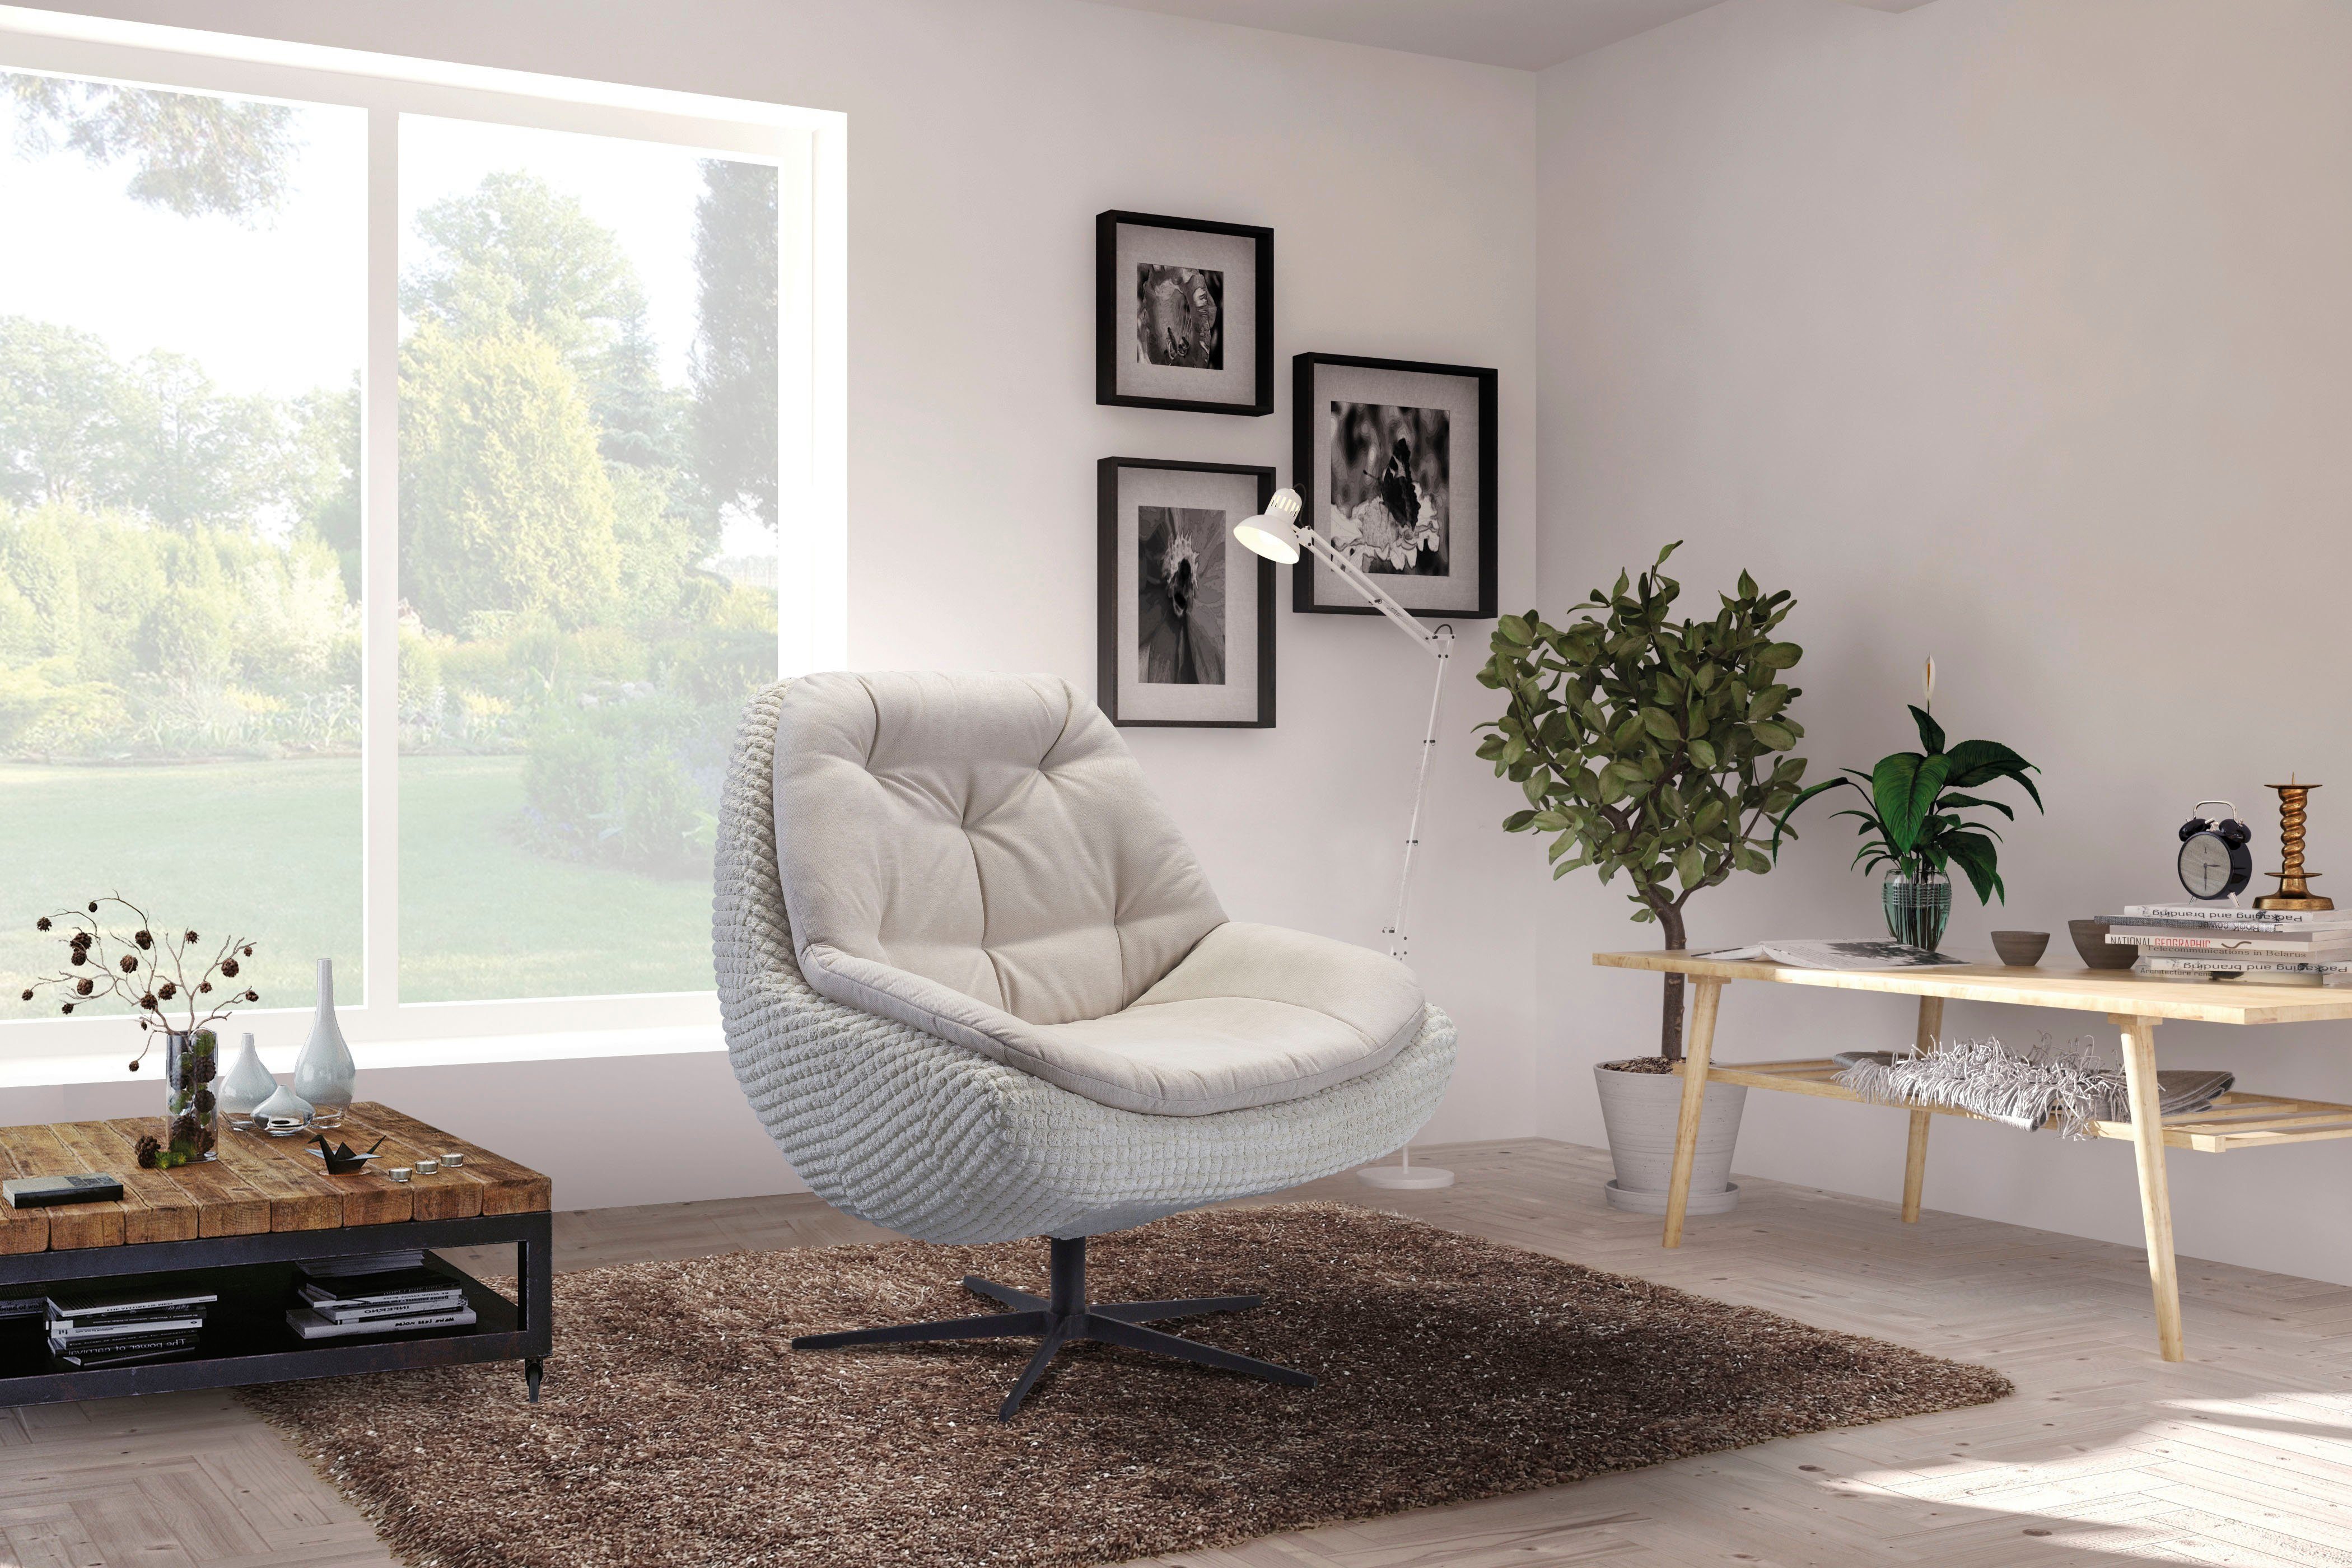 exxpo - sofa fashion Drehsessel Metall-Sternfuss mit Drehsessel, elegantem bequem ecru gepolstert